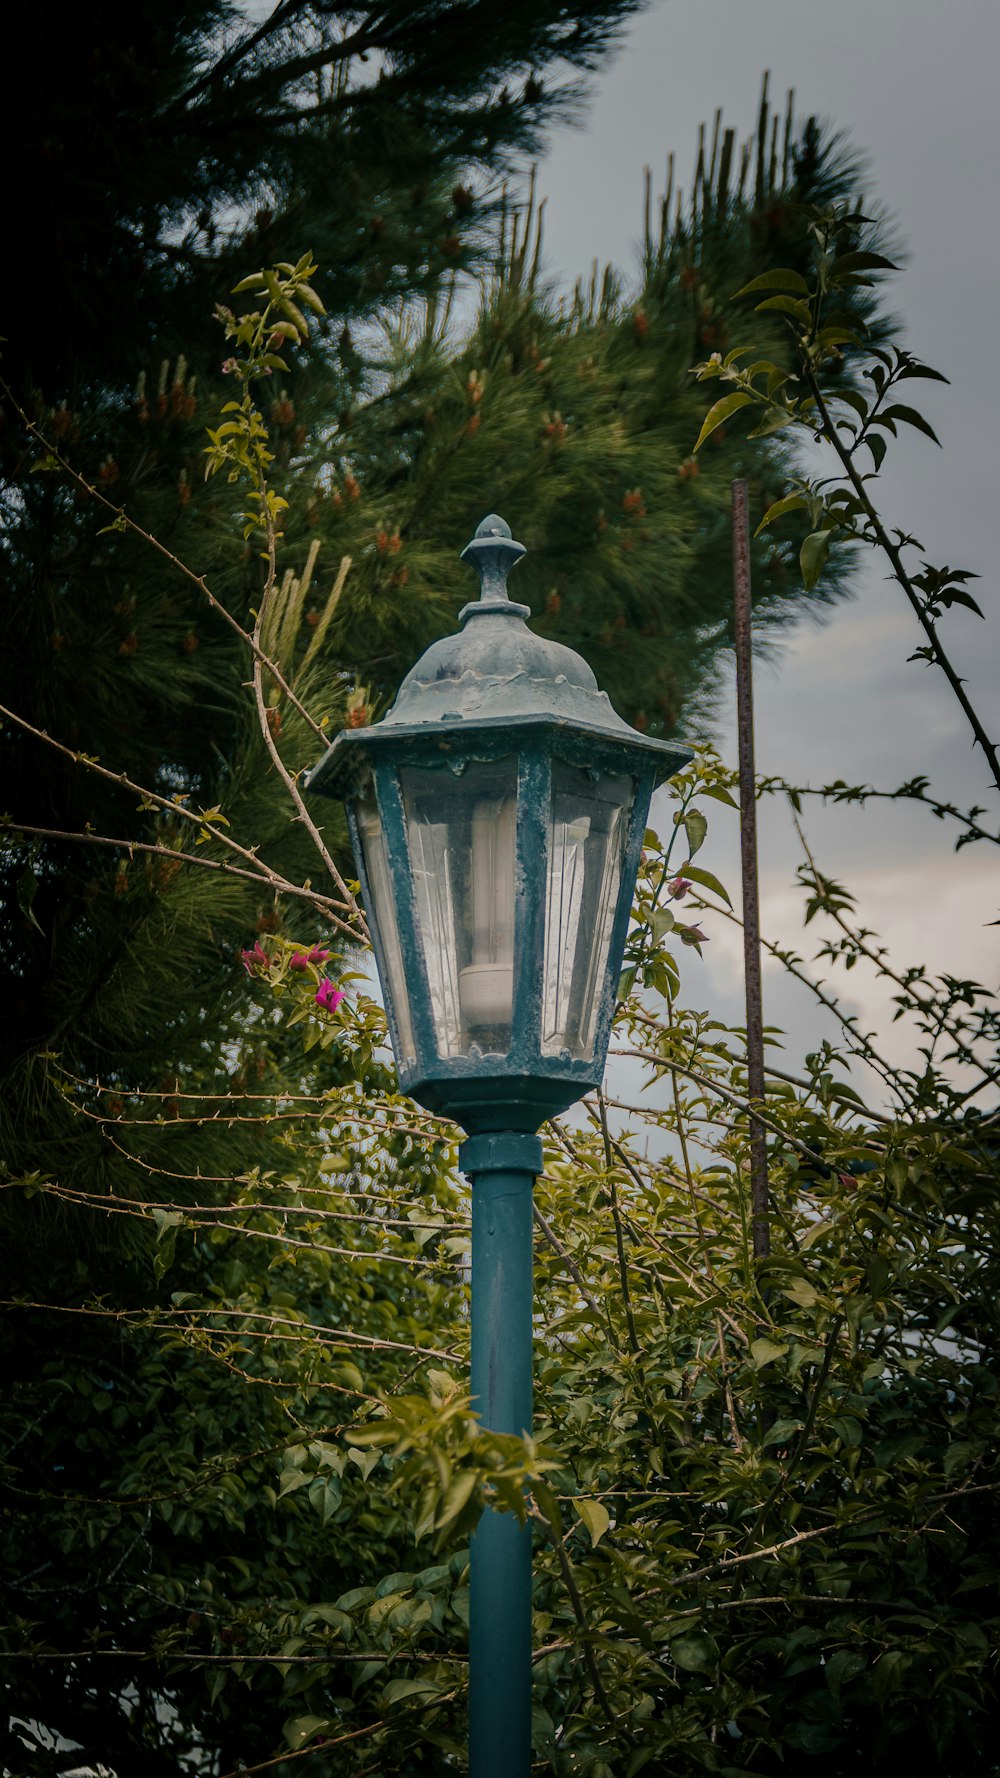 a blue street light sitting next to a tree